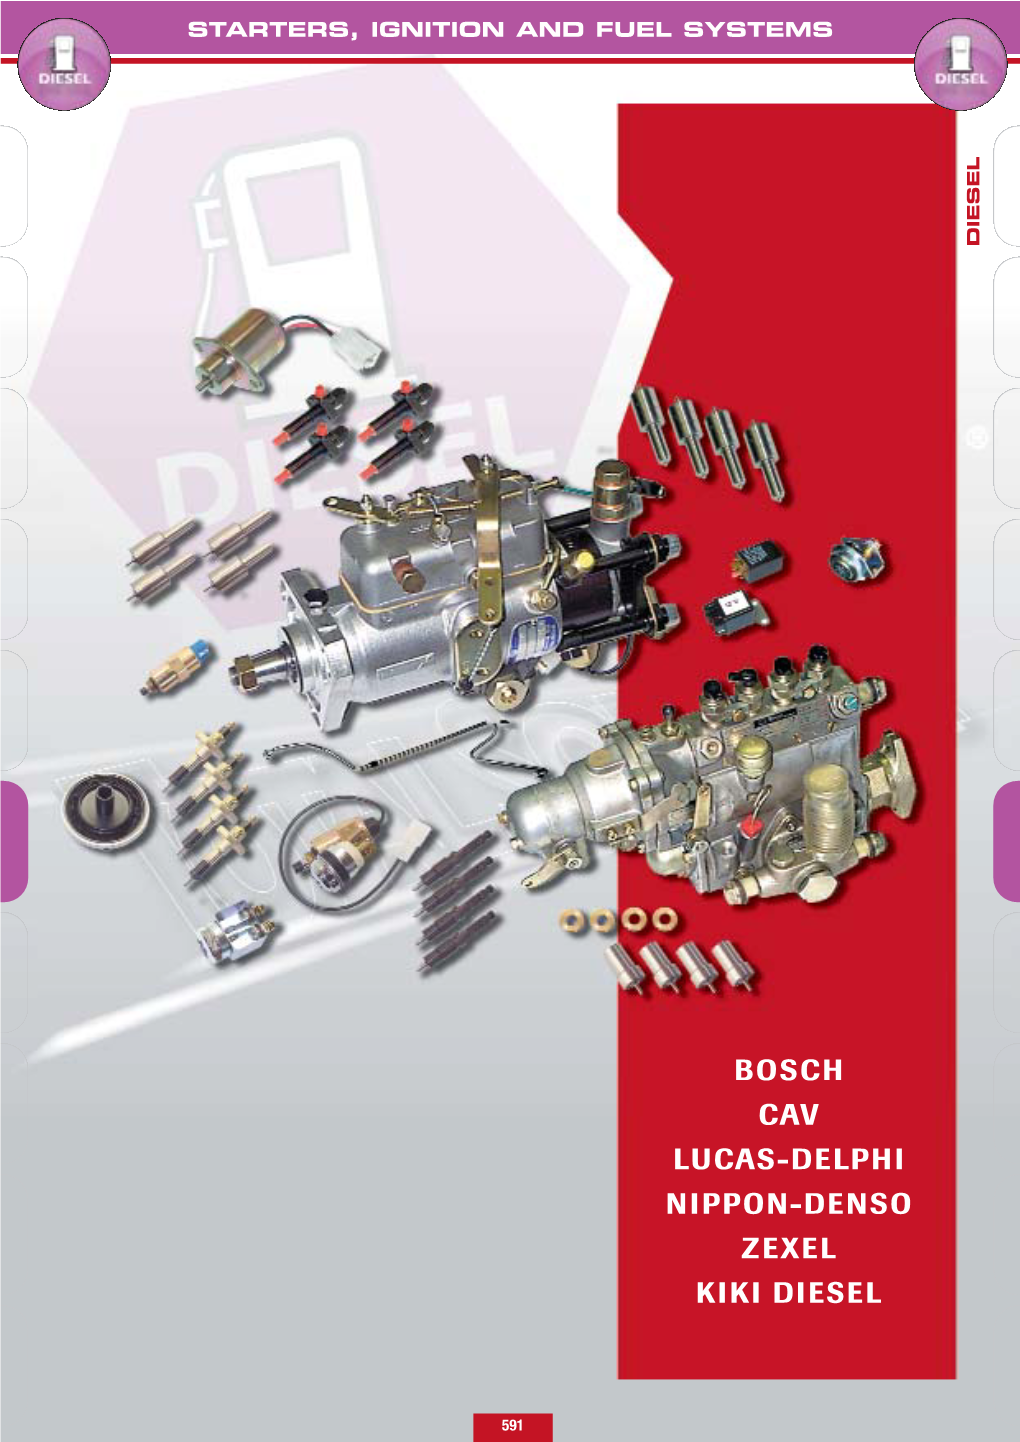 Bosch Cav Lucas-Delphi Nippon-Denso Zexel Kiki Diesel